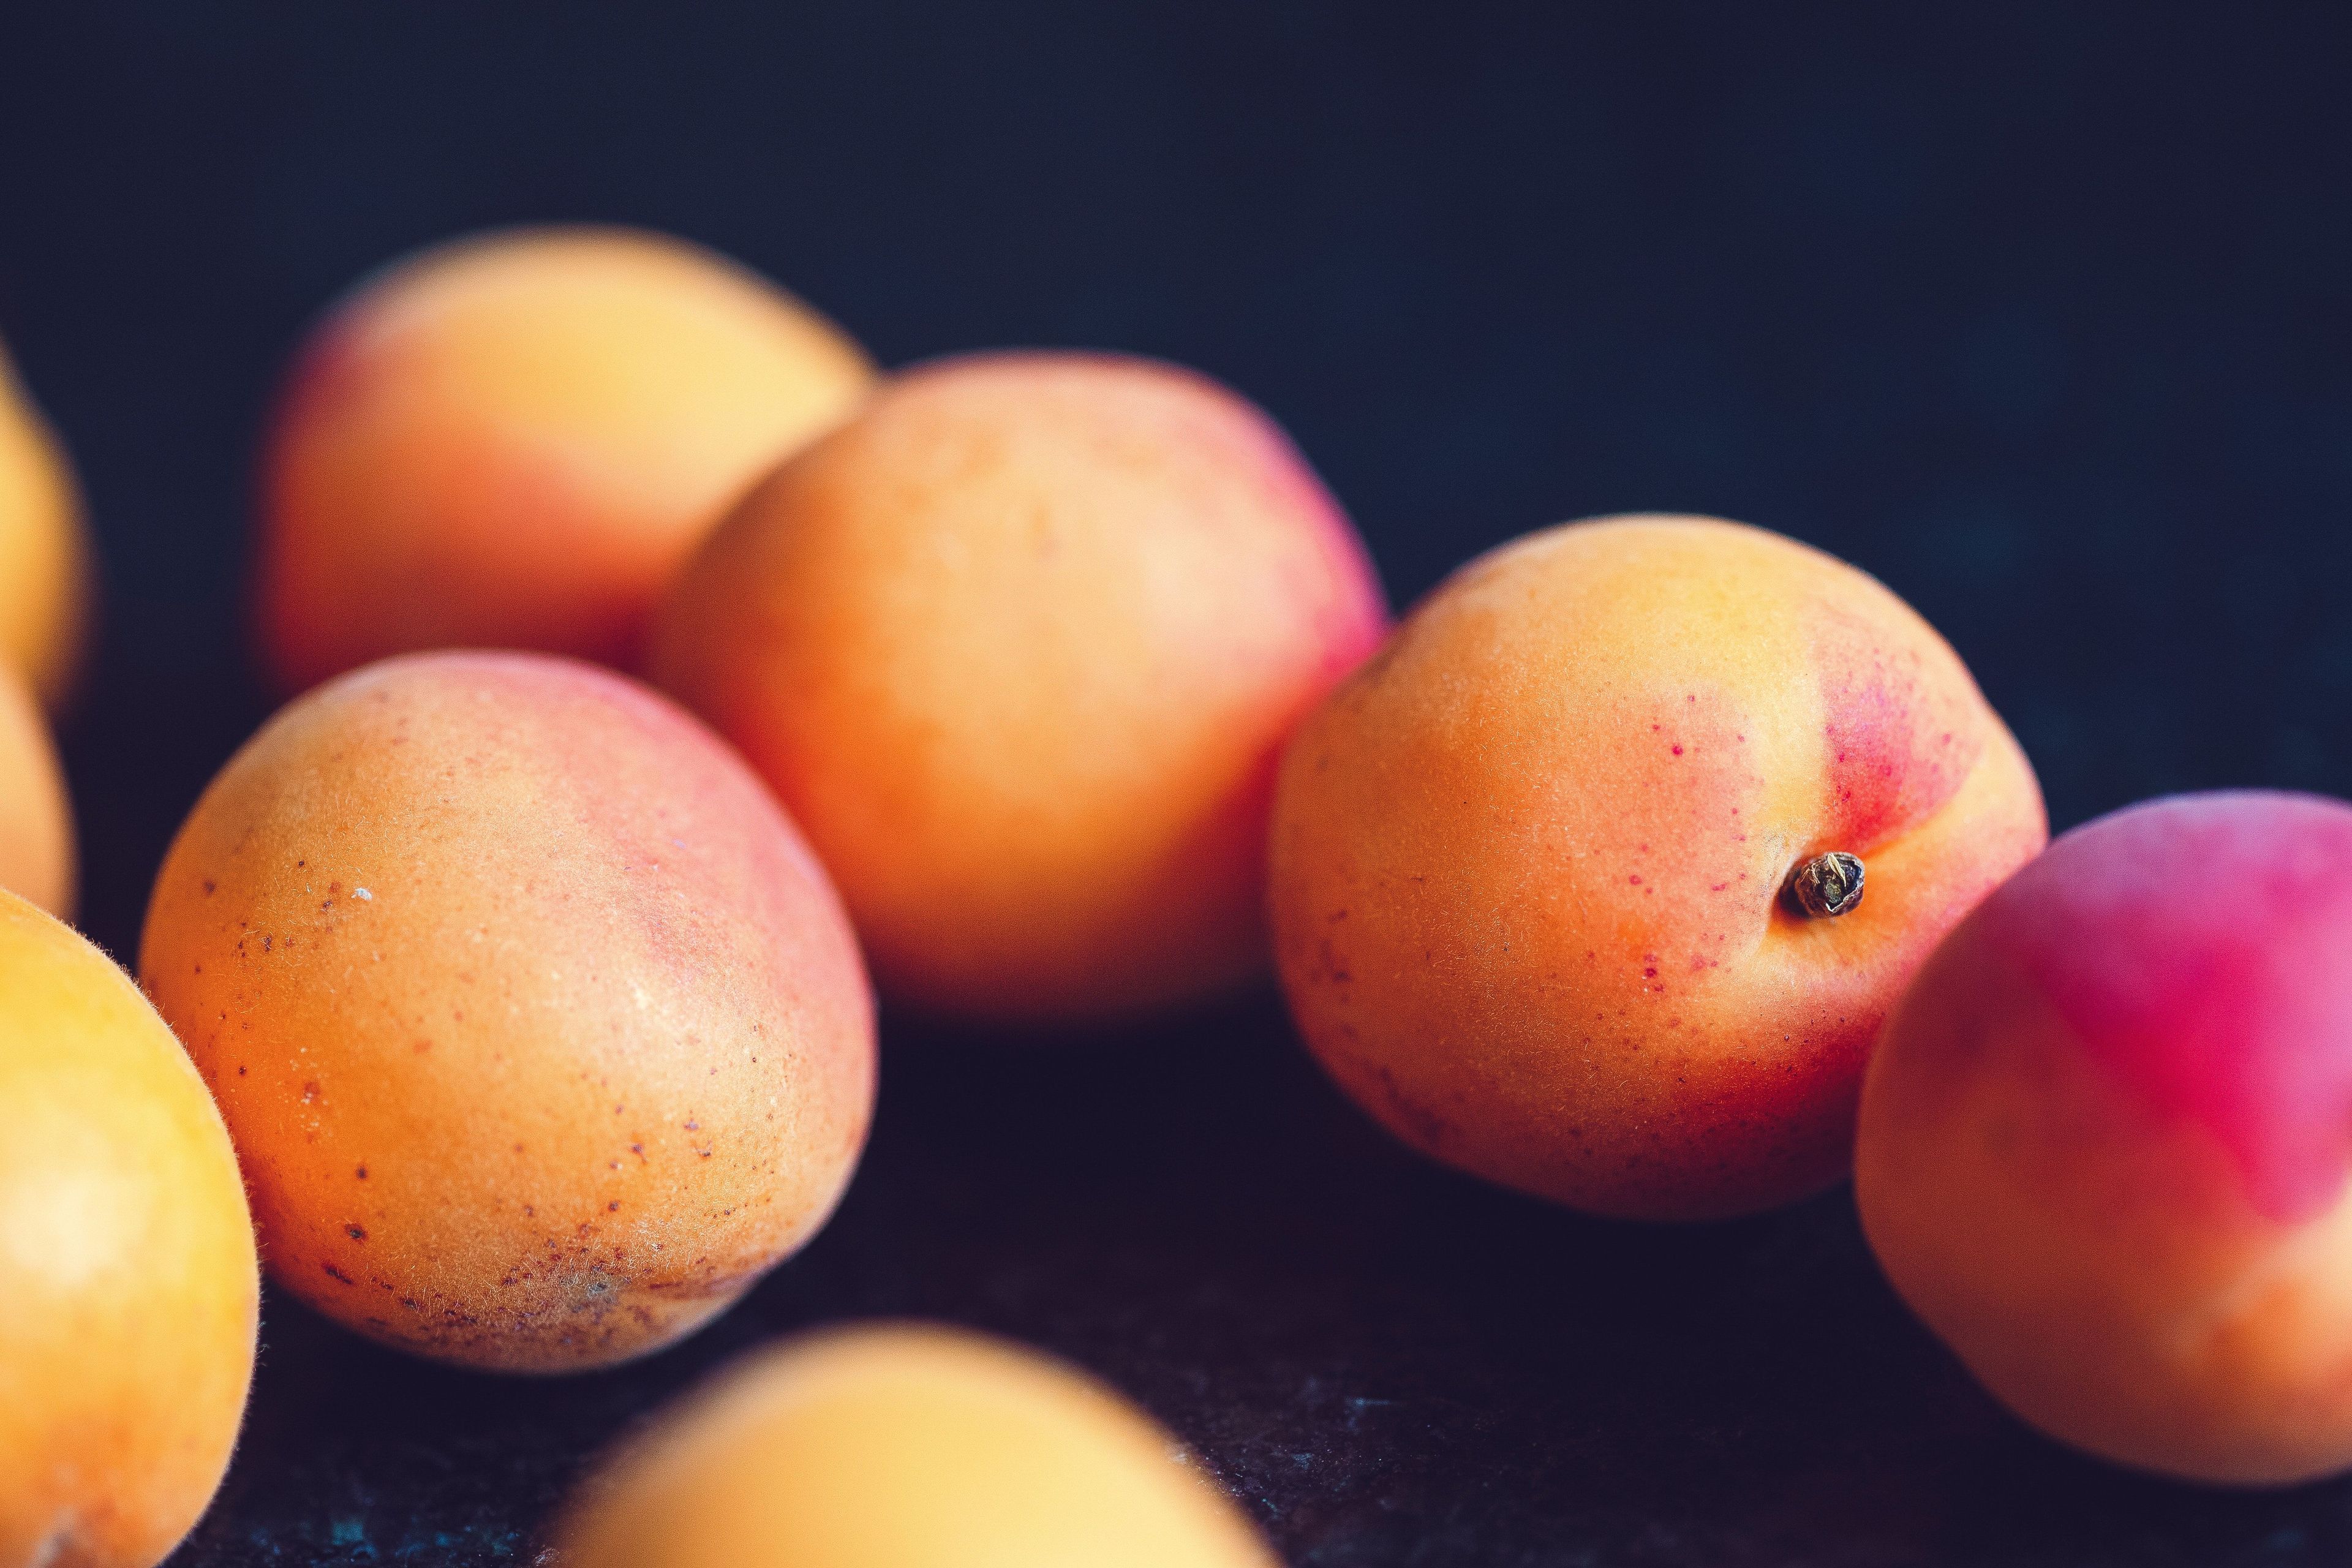 Peaches against dark backgrounds